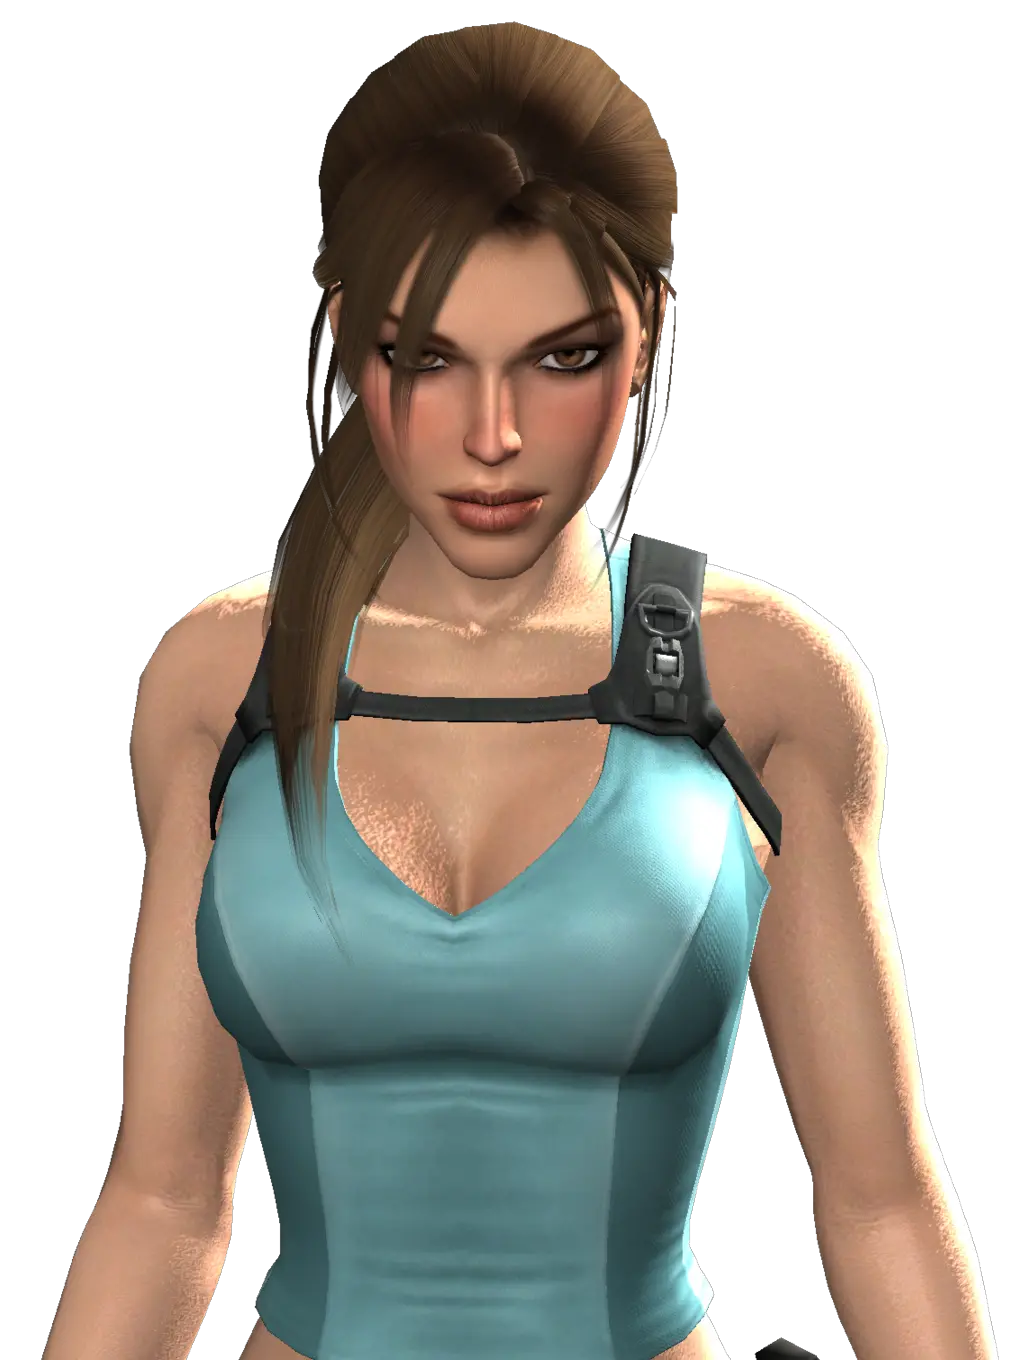 Download Lara Croft Png Pic For Lara Croft Tomb Raider Legend Lara Croft Transparent